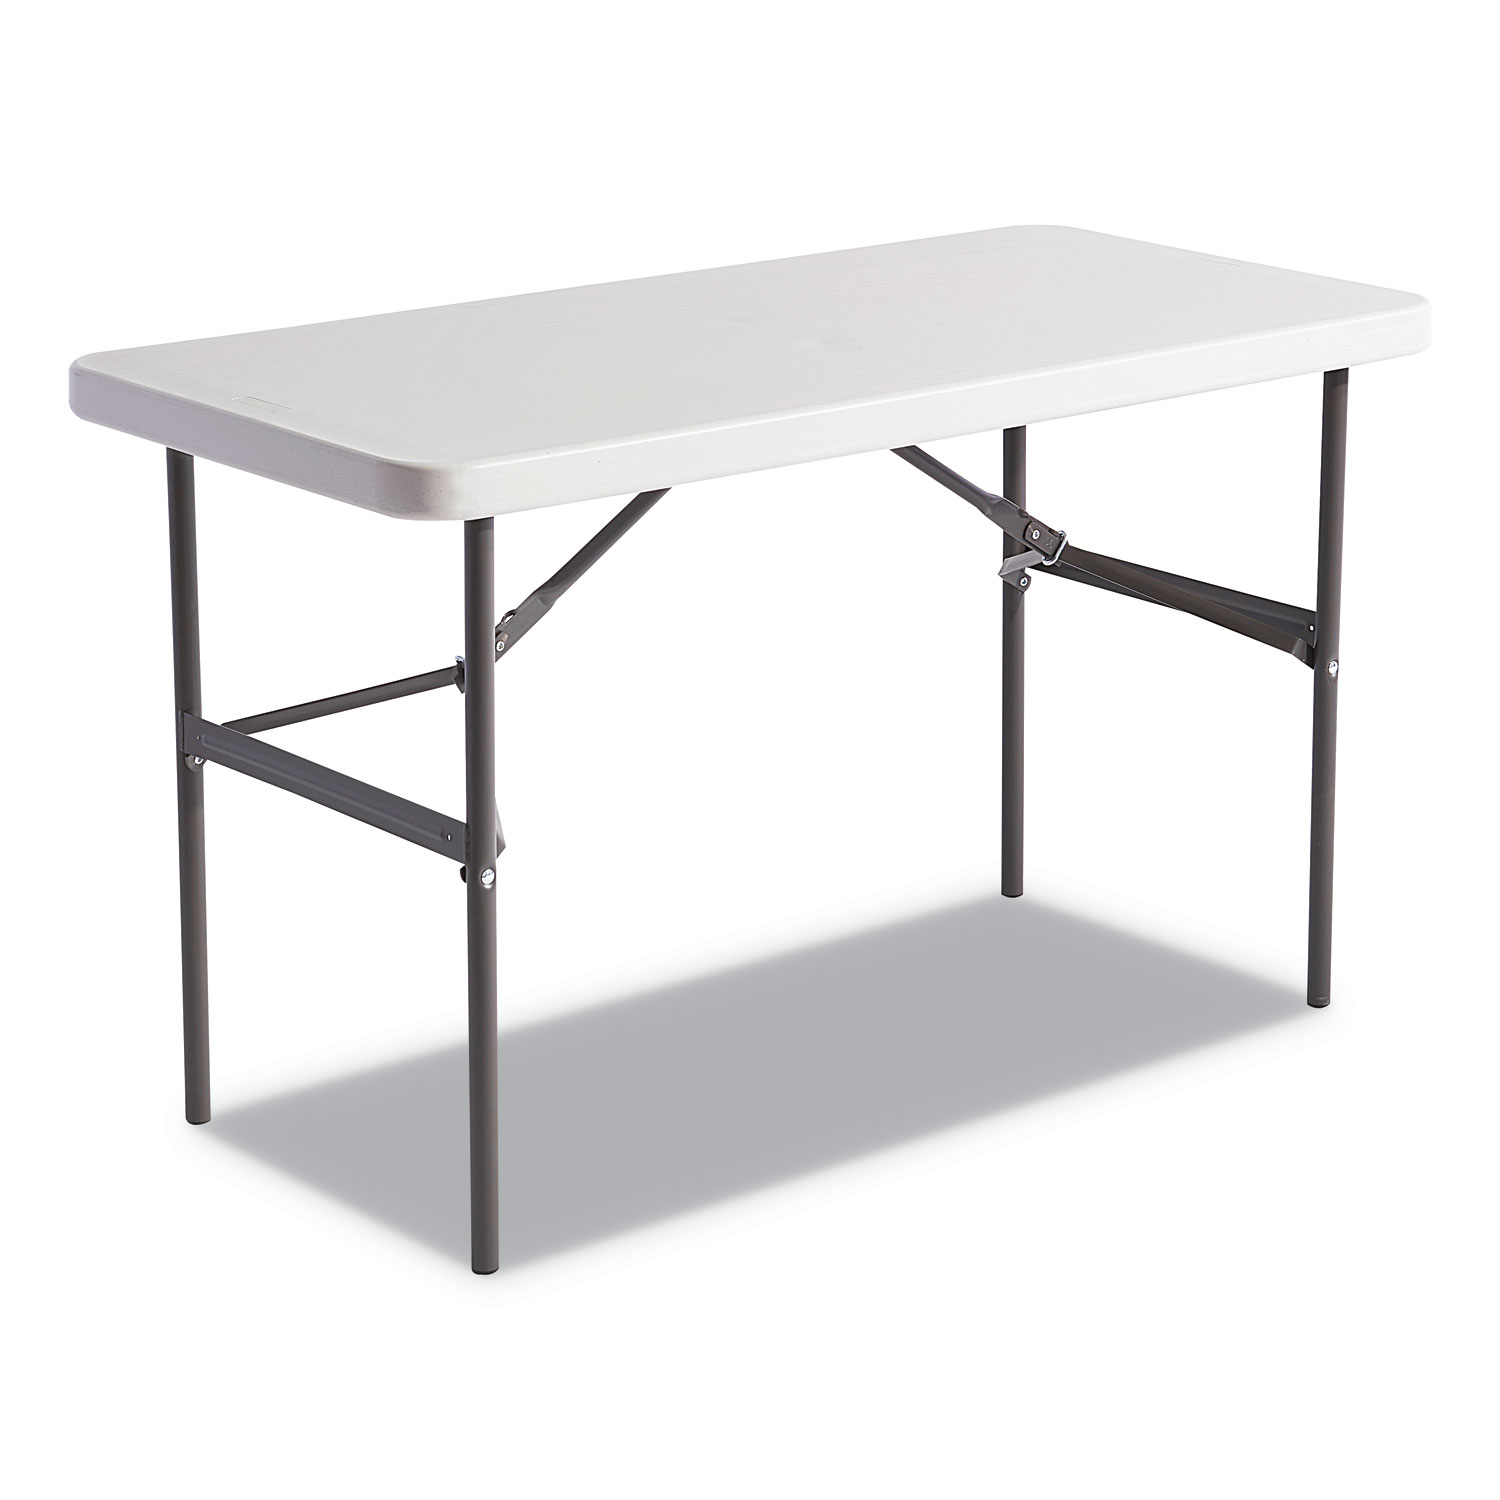  Alera 65603 Banquet Folding Table, Rectangular, Radius Edge, 48 x 24 x 29, Platinum/Charcoal (ALE65603) 